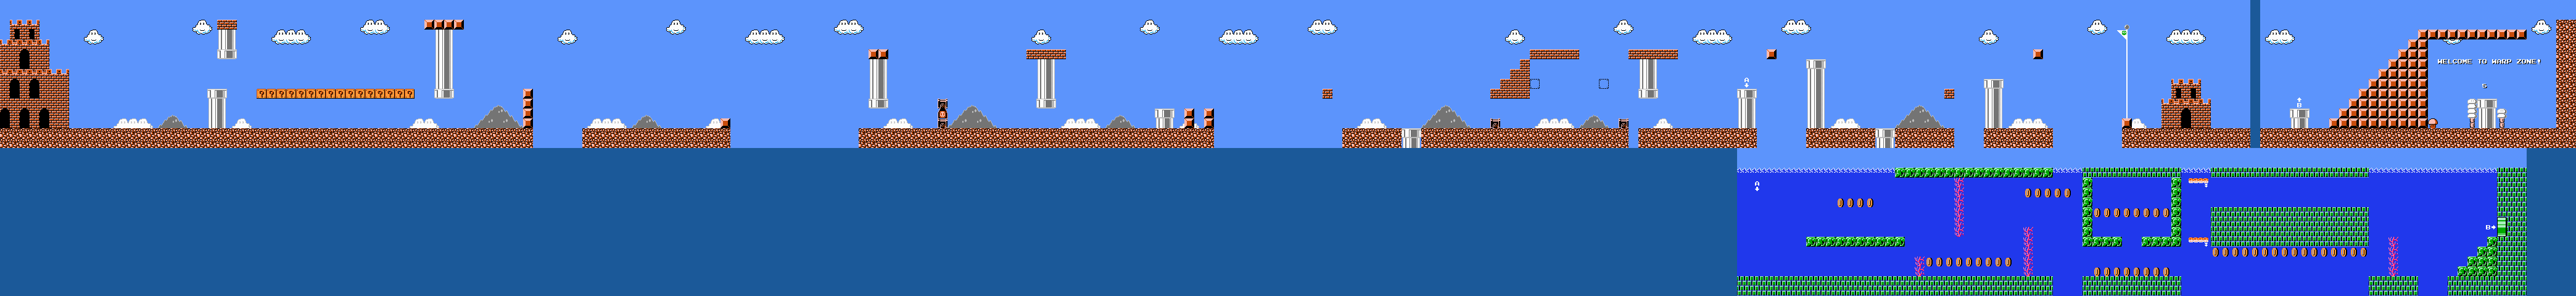 Super Mario Bros. 2 / The Lost Levels (JPN) - World 8-1